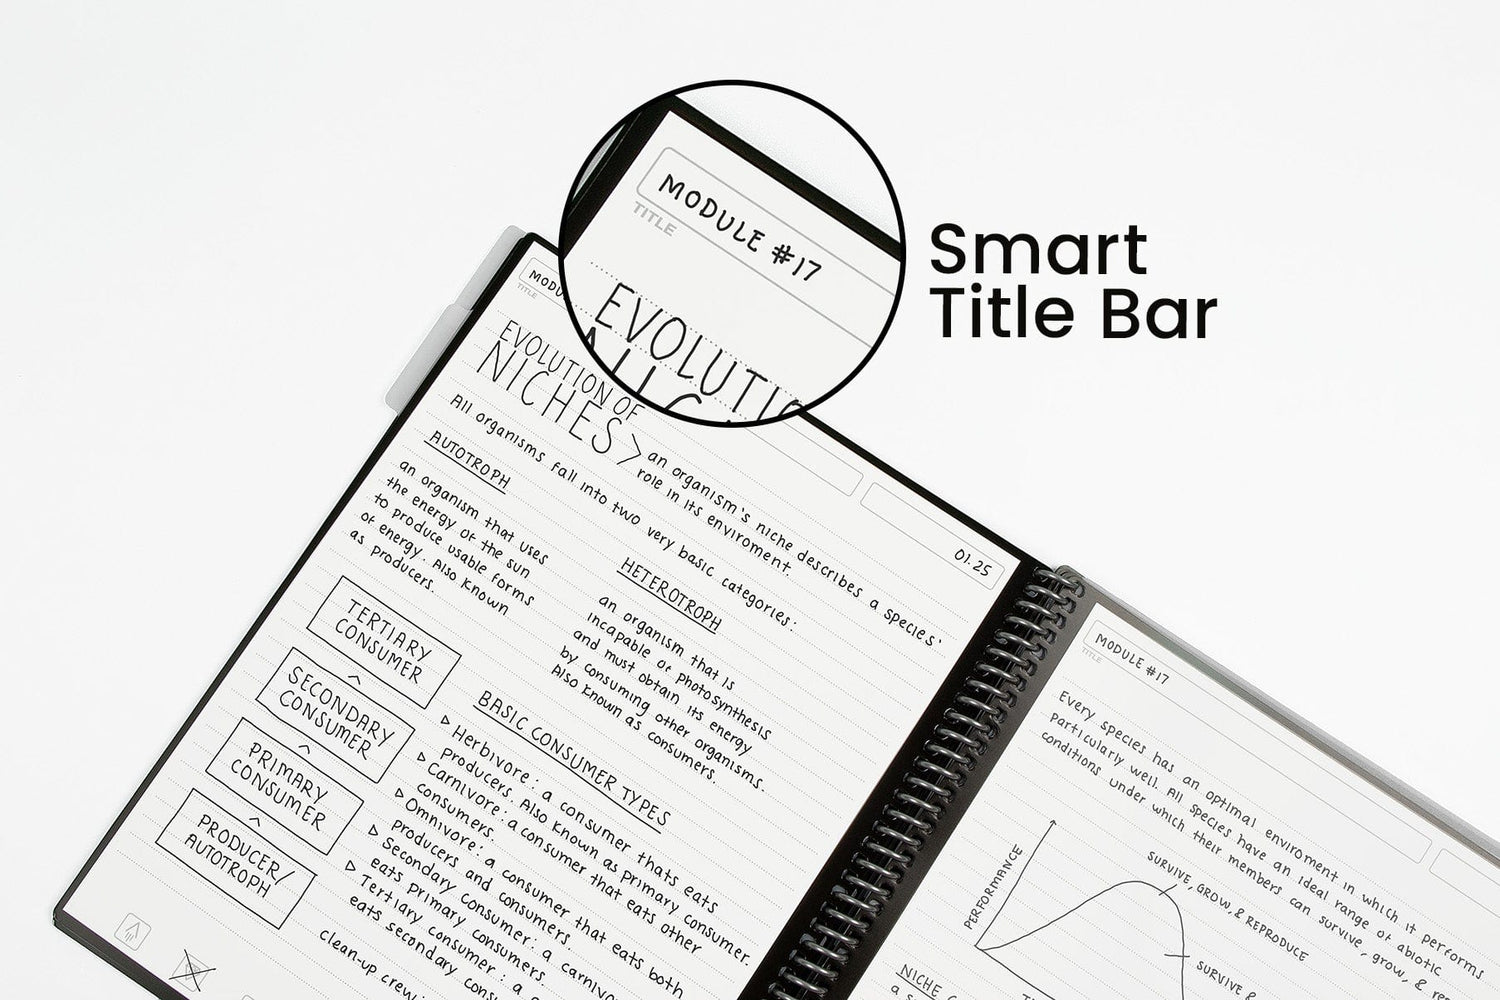 smart title bar in multi-subject notebook